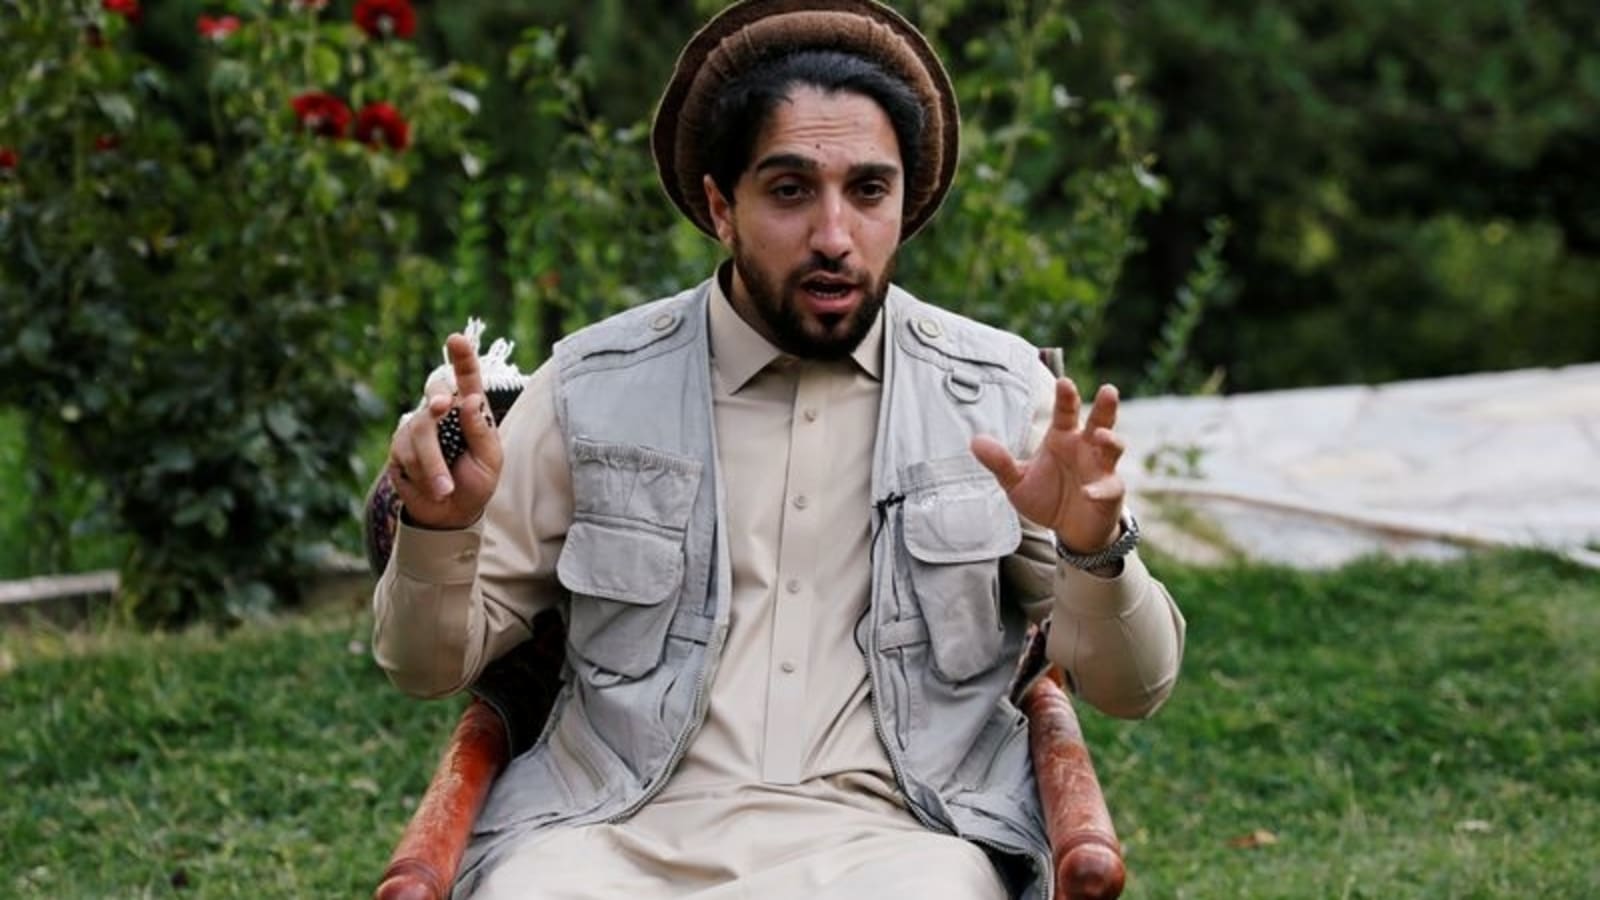 ‘Do not want war’: What Massoud said on Panjshir Resistance, deal with Taliban | World News